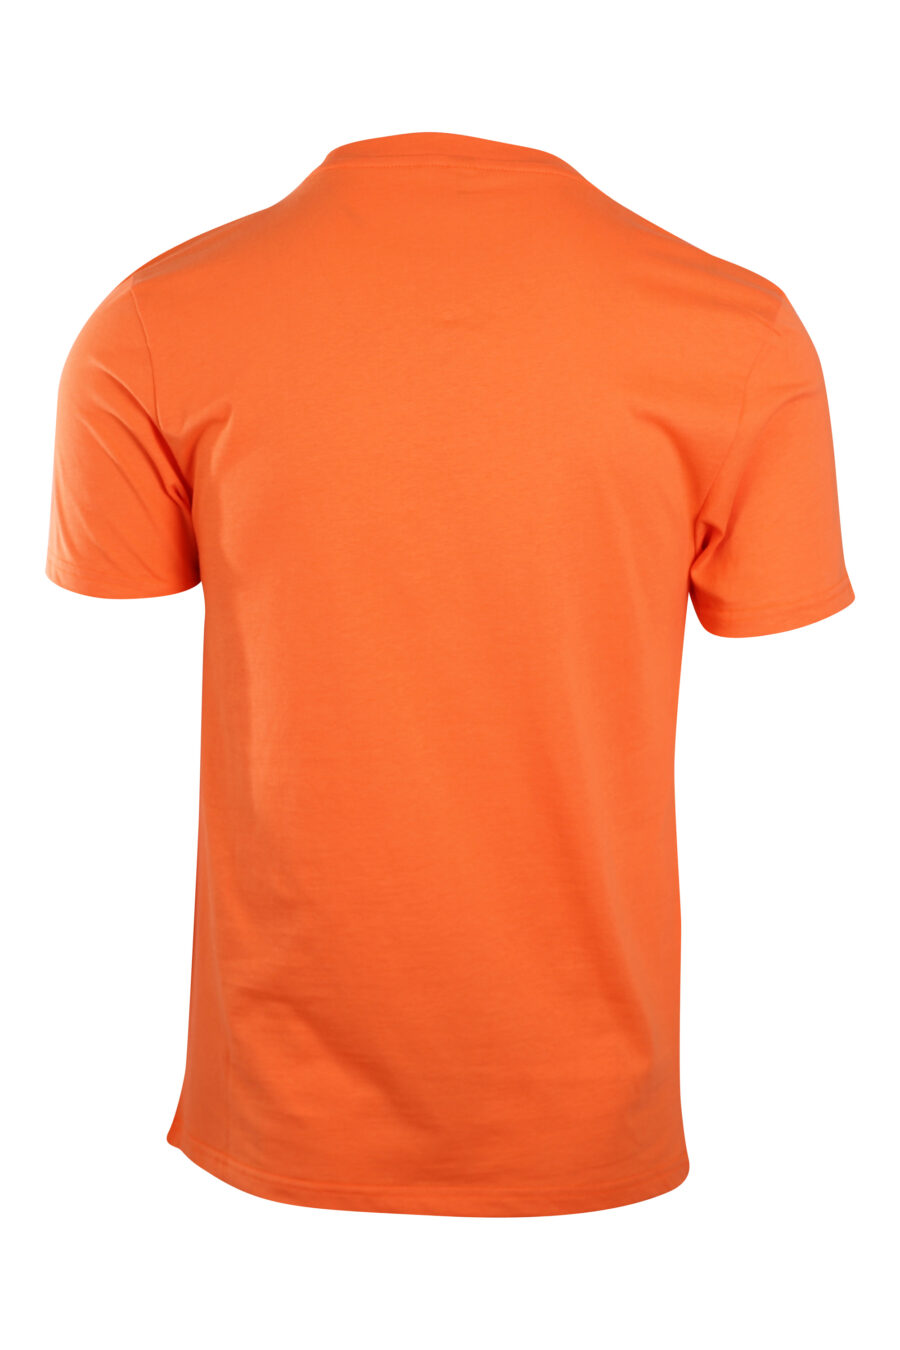 Orange T-shirt with logo shoulder band - IMG 2198